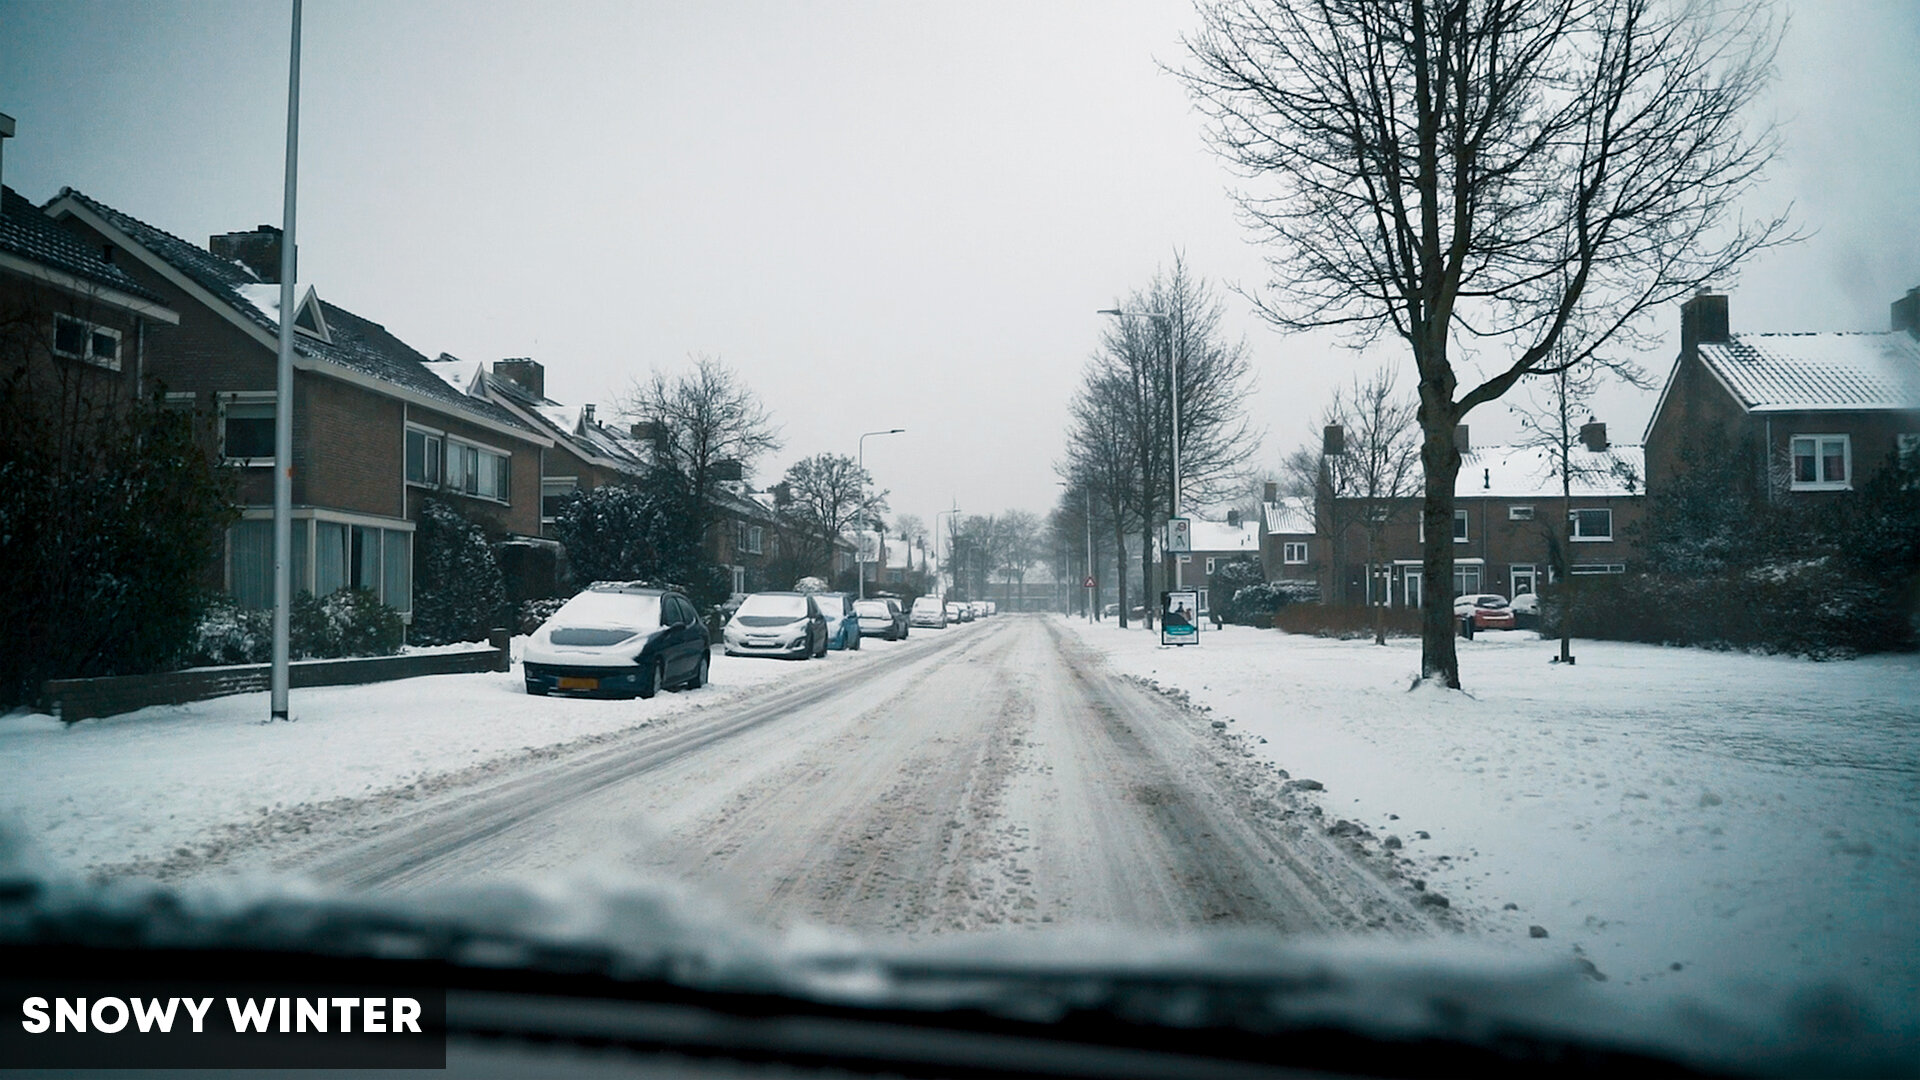 4. Snowy Winter - AFTER (Straat).jpg